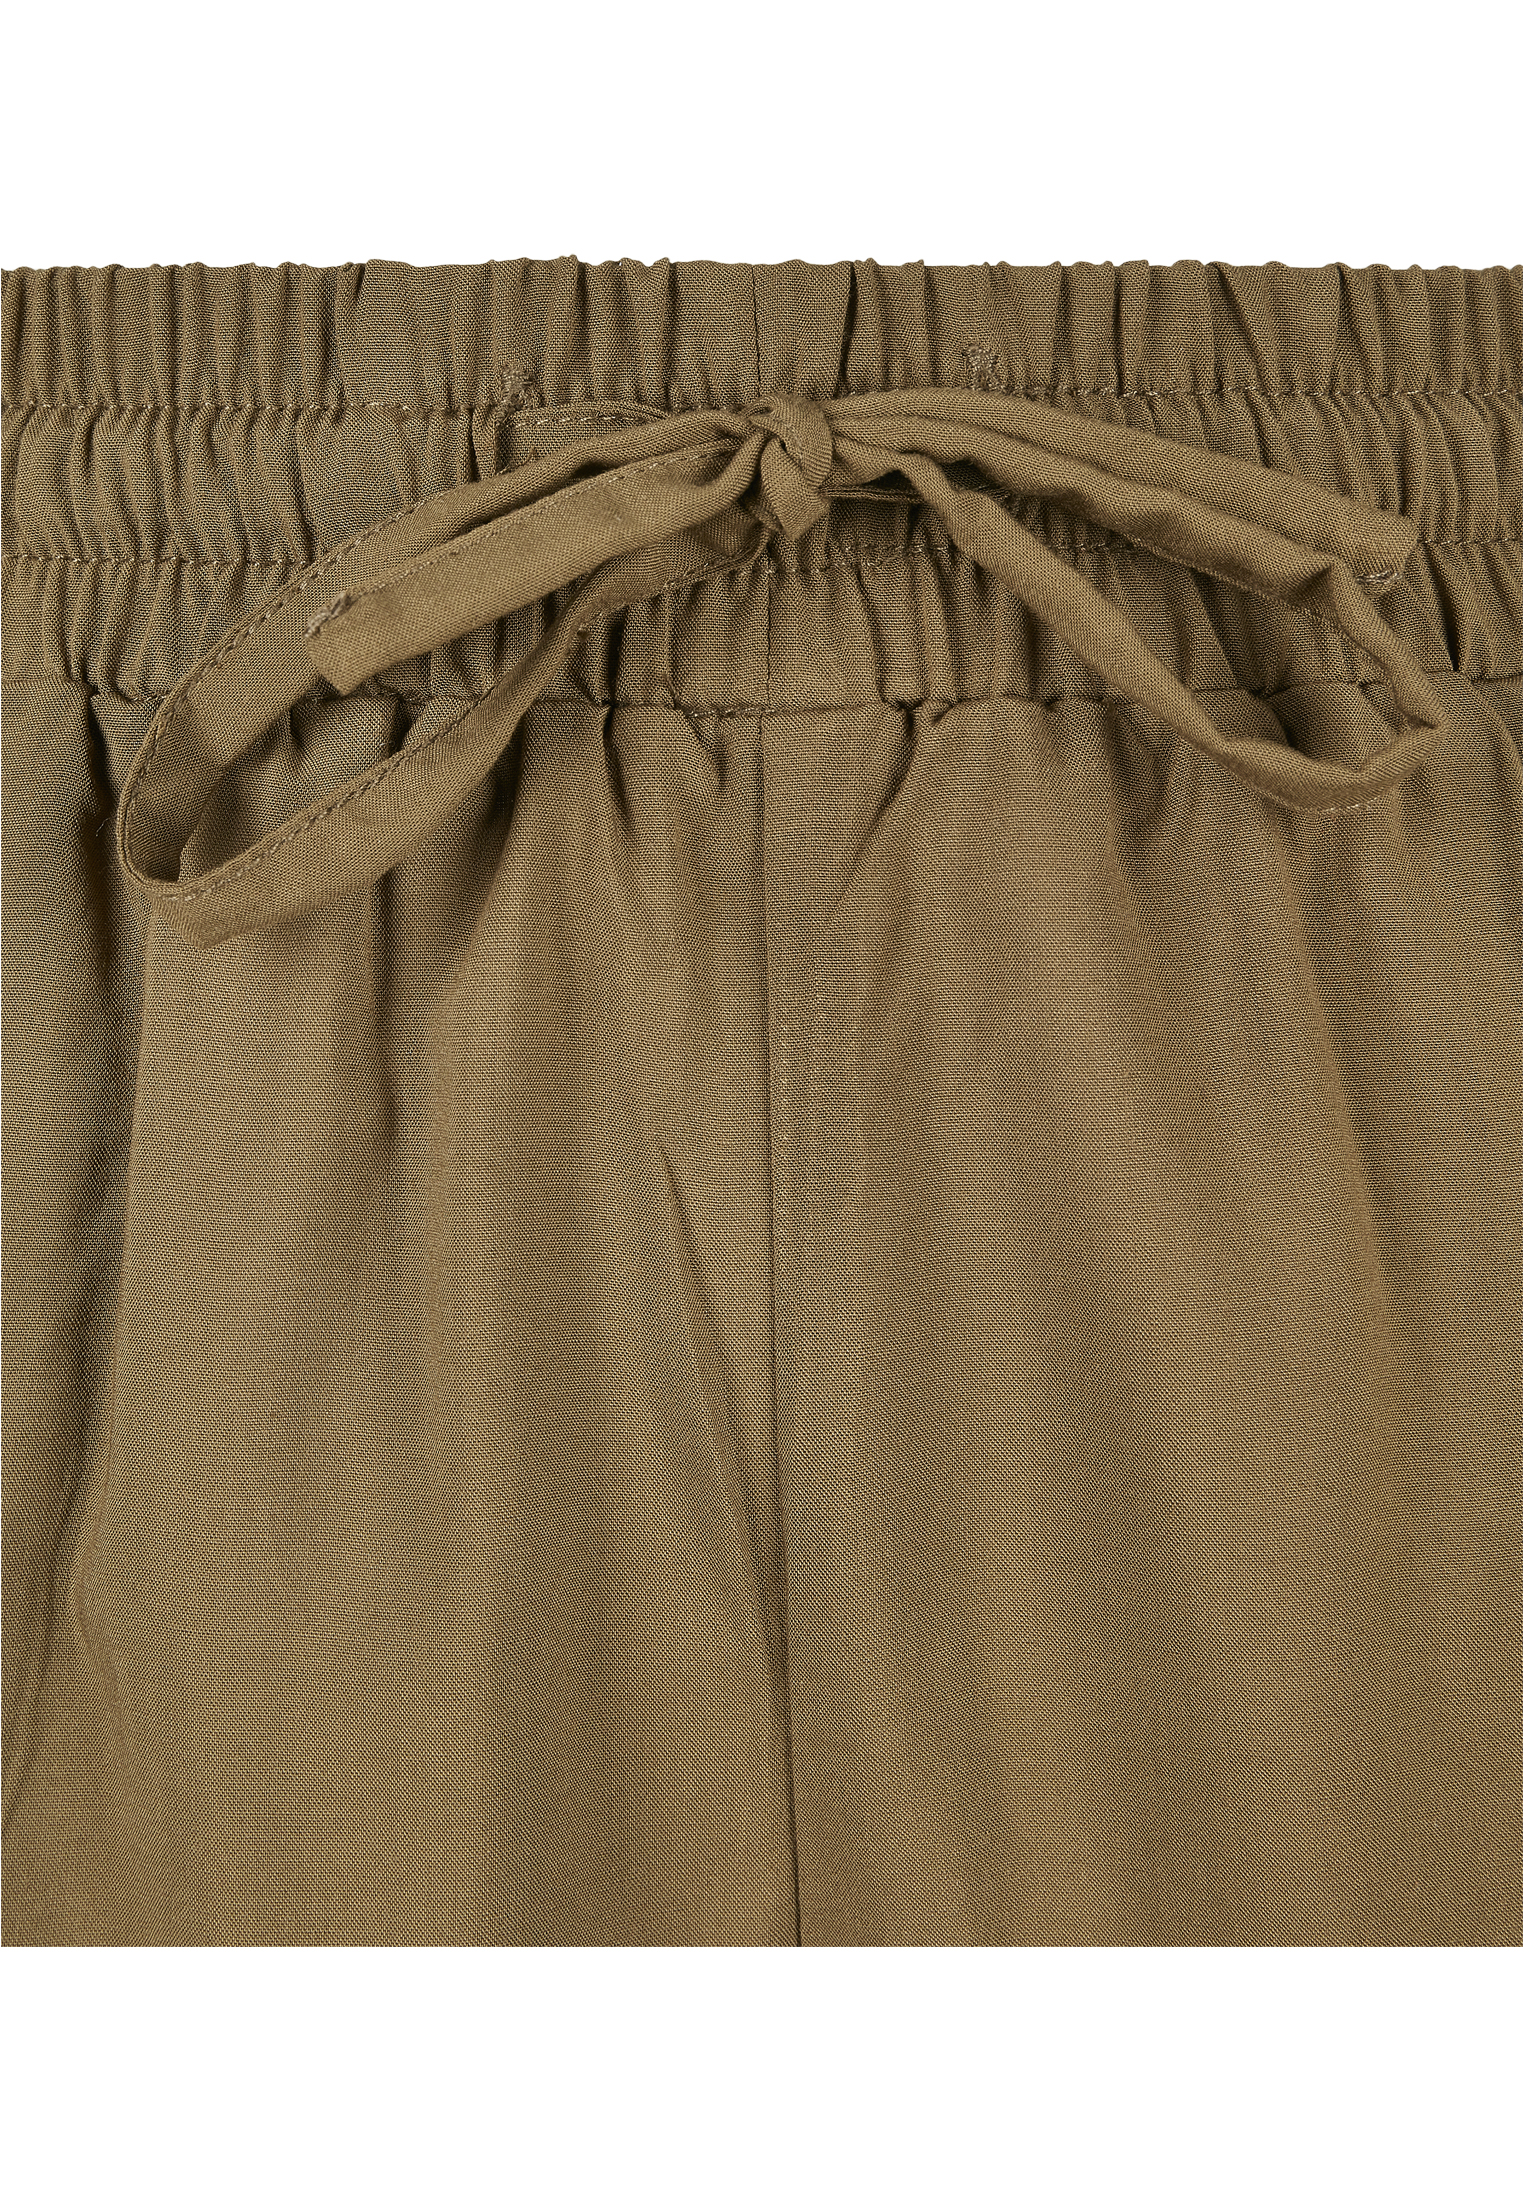 Curvy Ladies Viscose Resort Shorts in Farbe summerolive